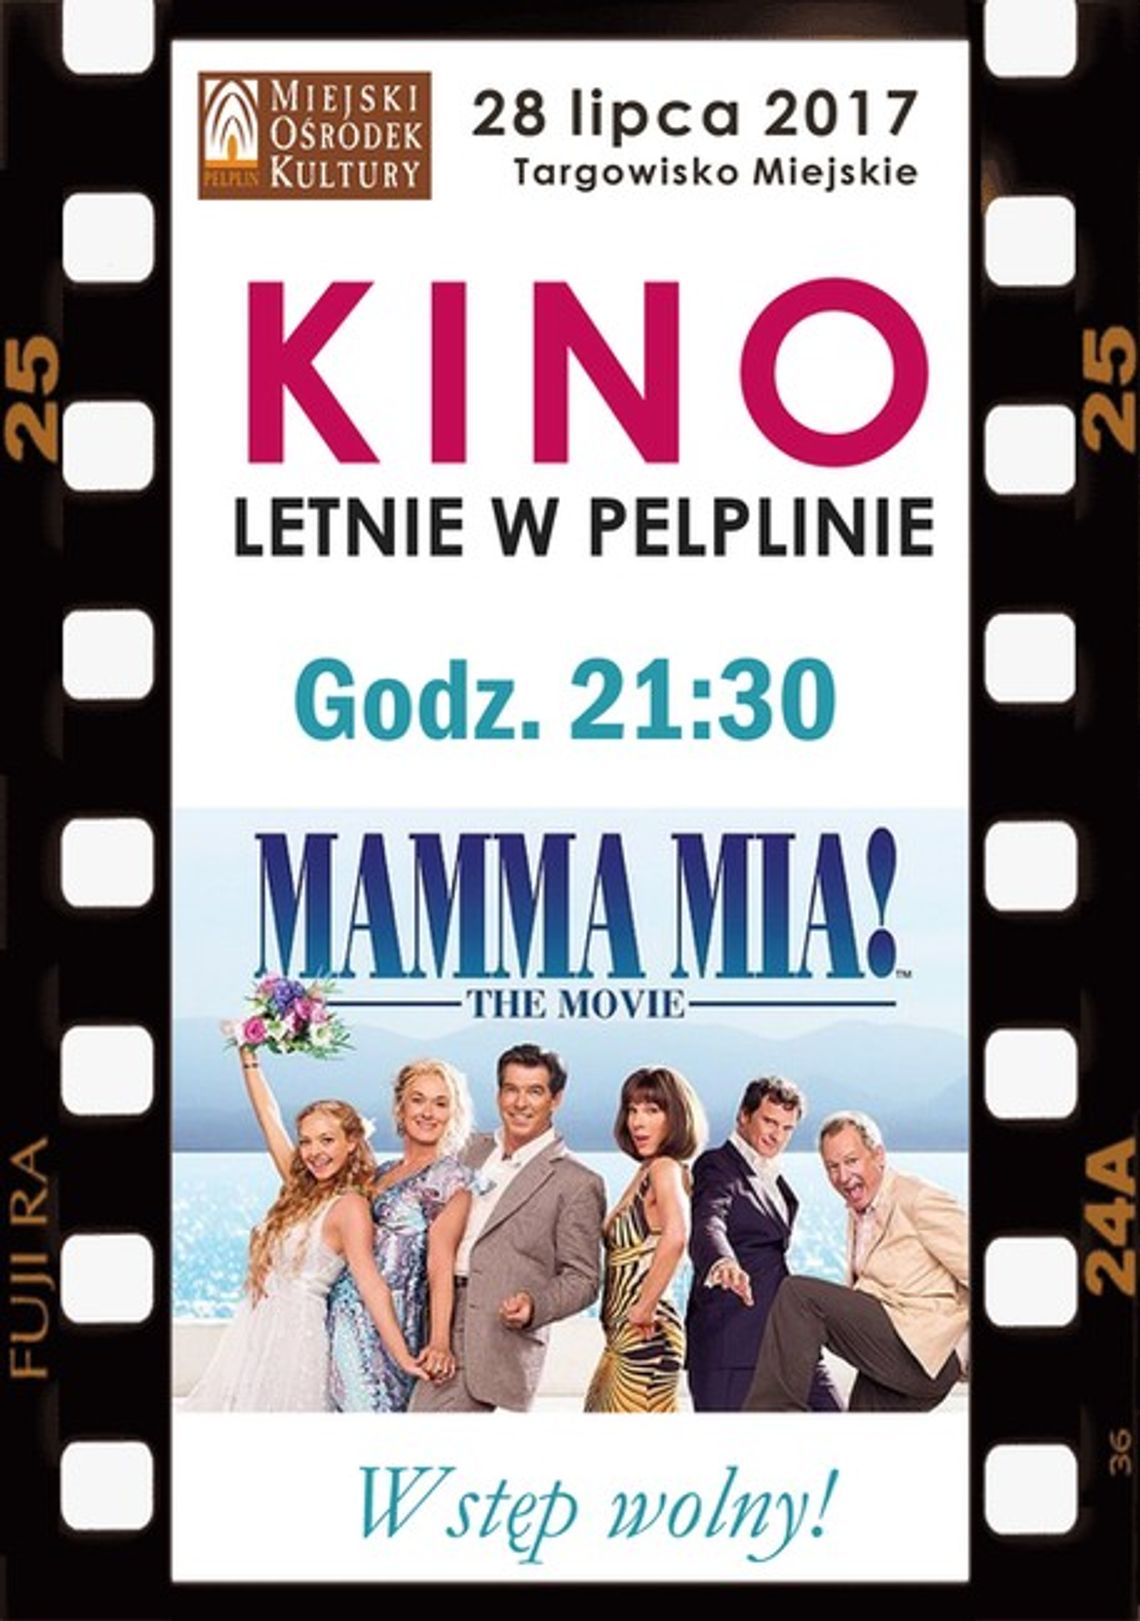  Kino Letnie zaprasza na film "Mamma Mia!".